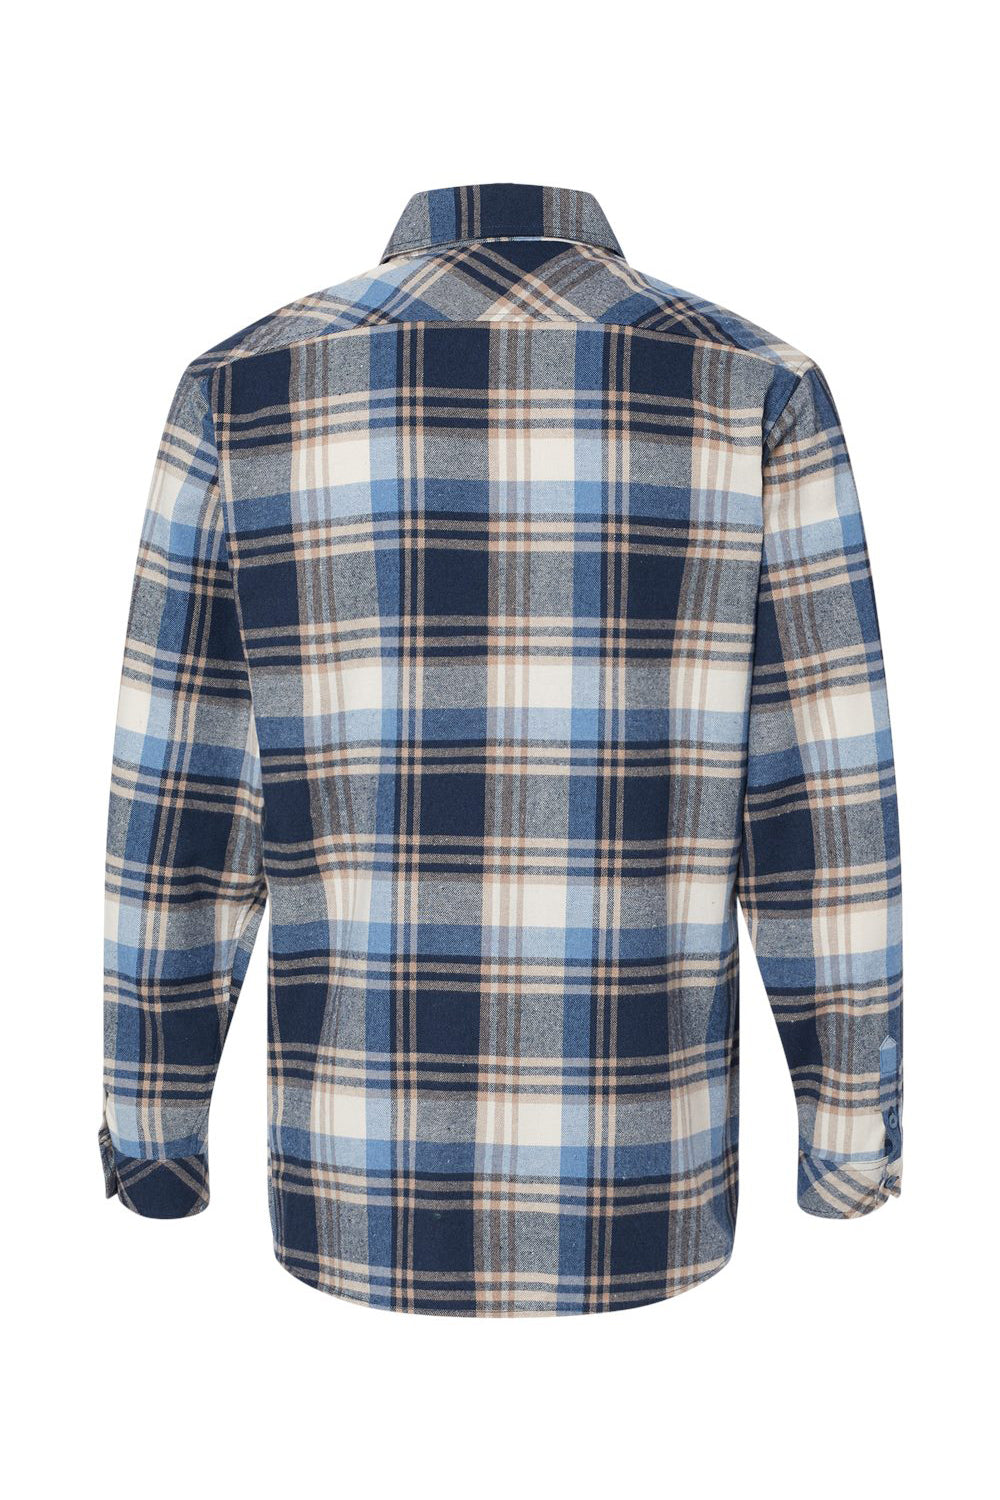 Burnside B8212 Mens Flannel Long Sleeve Button Down Shirt w/ Pocket Blue/Ecru Flat Back